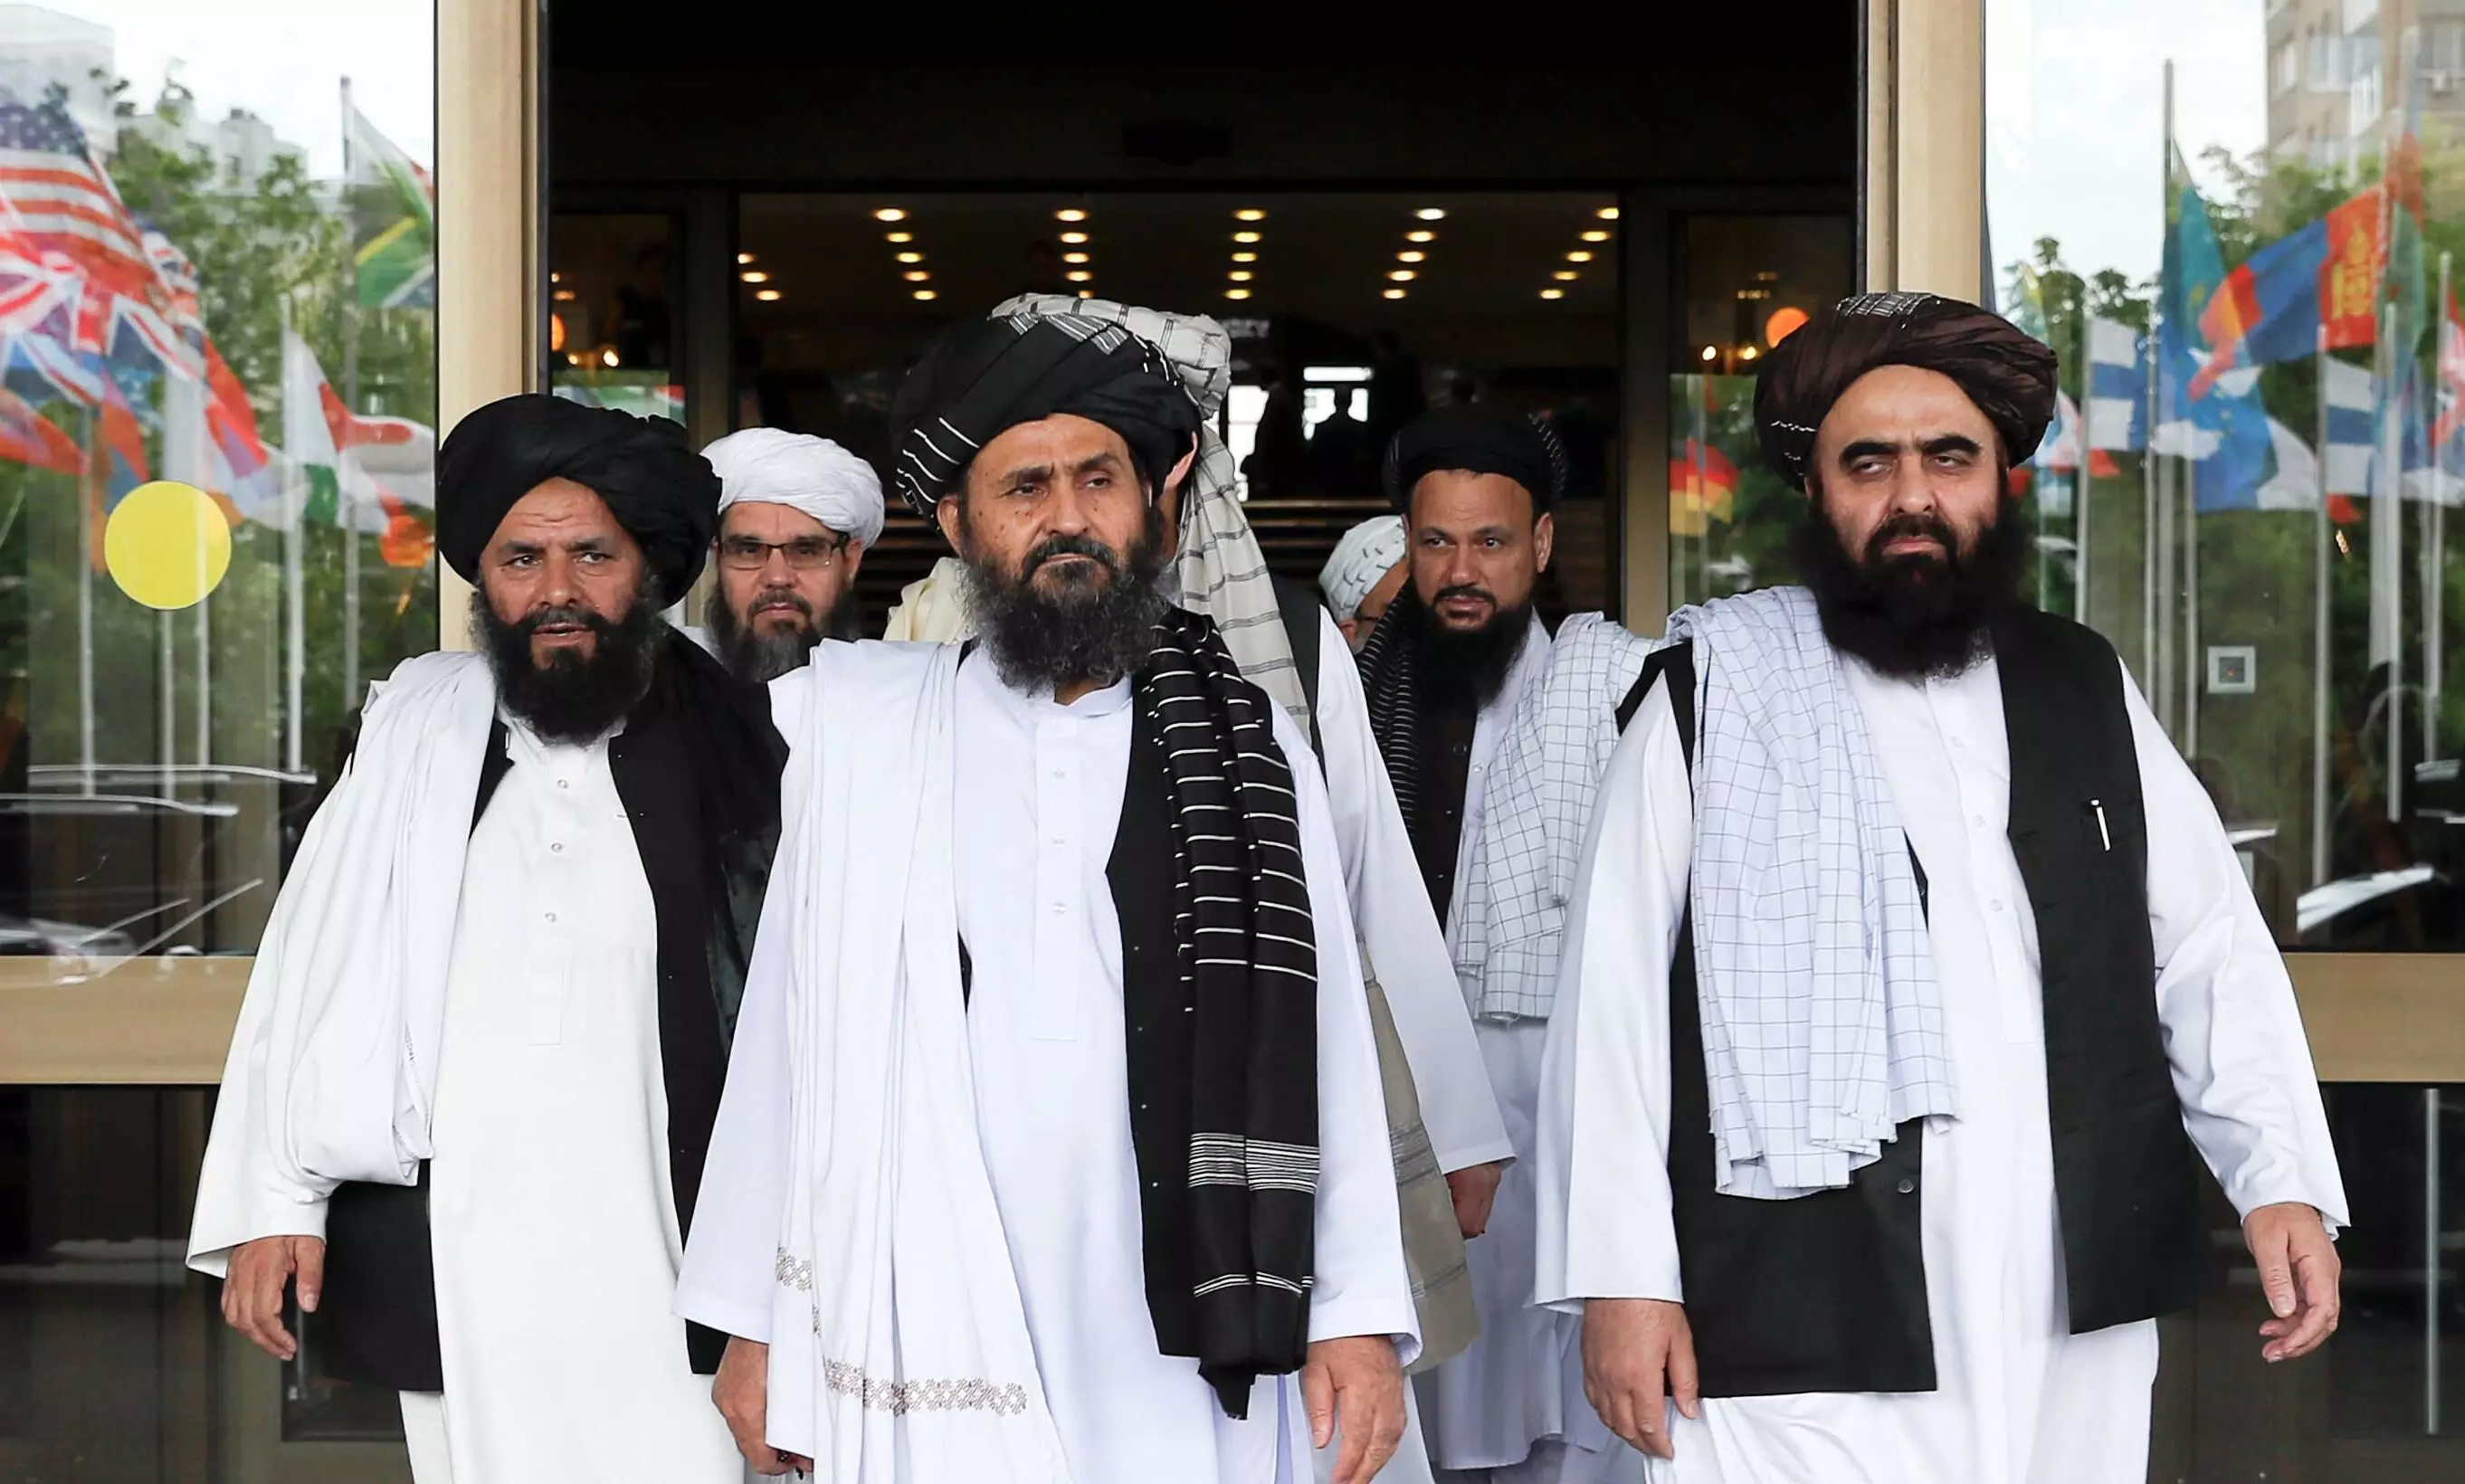 taliban leaders